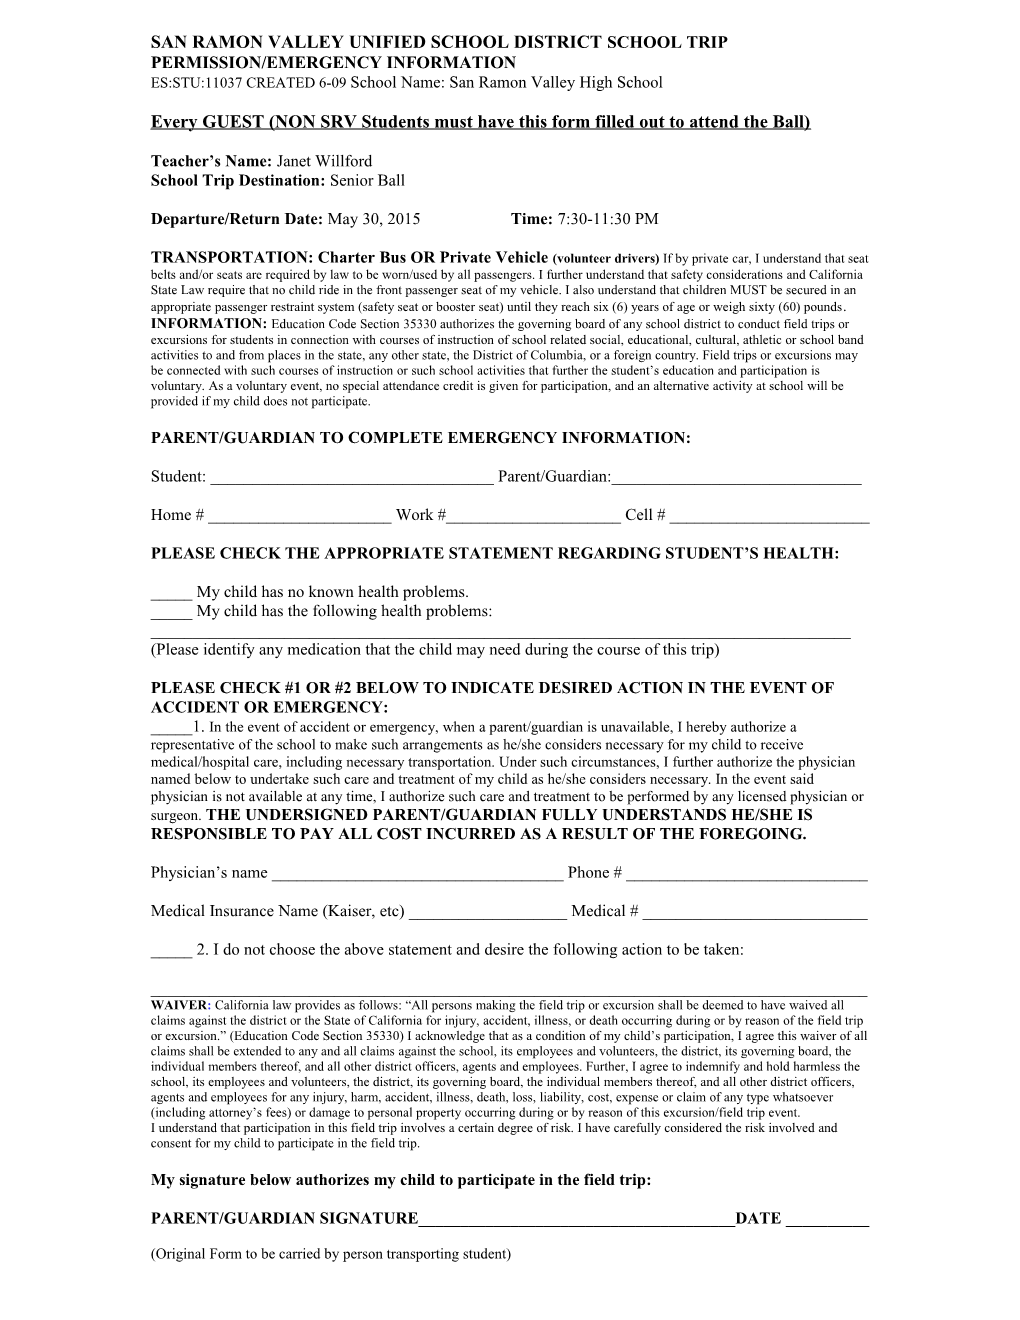 San Ramon Valley Unified School District School Trip Permission/Emergency Information